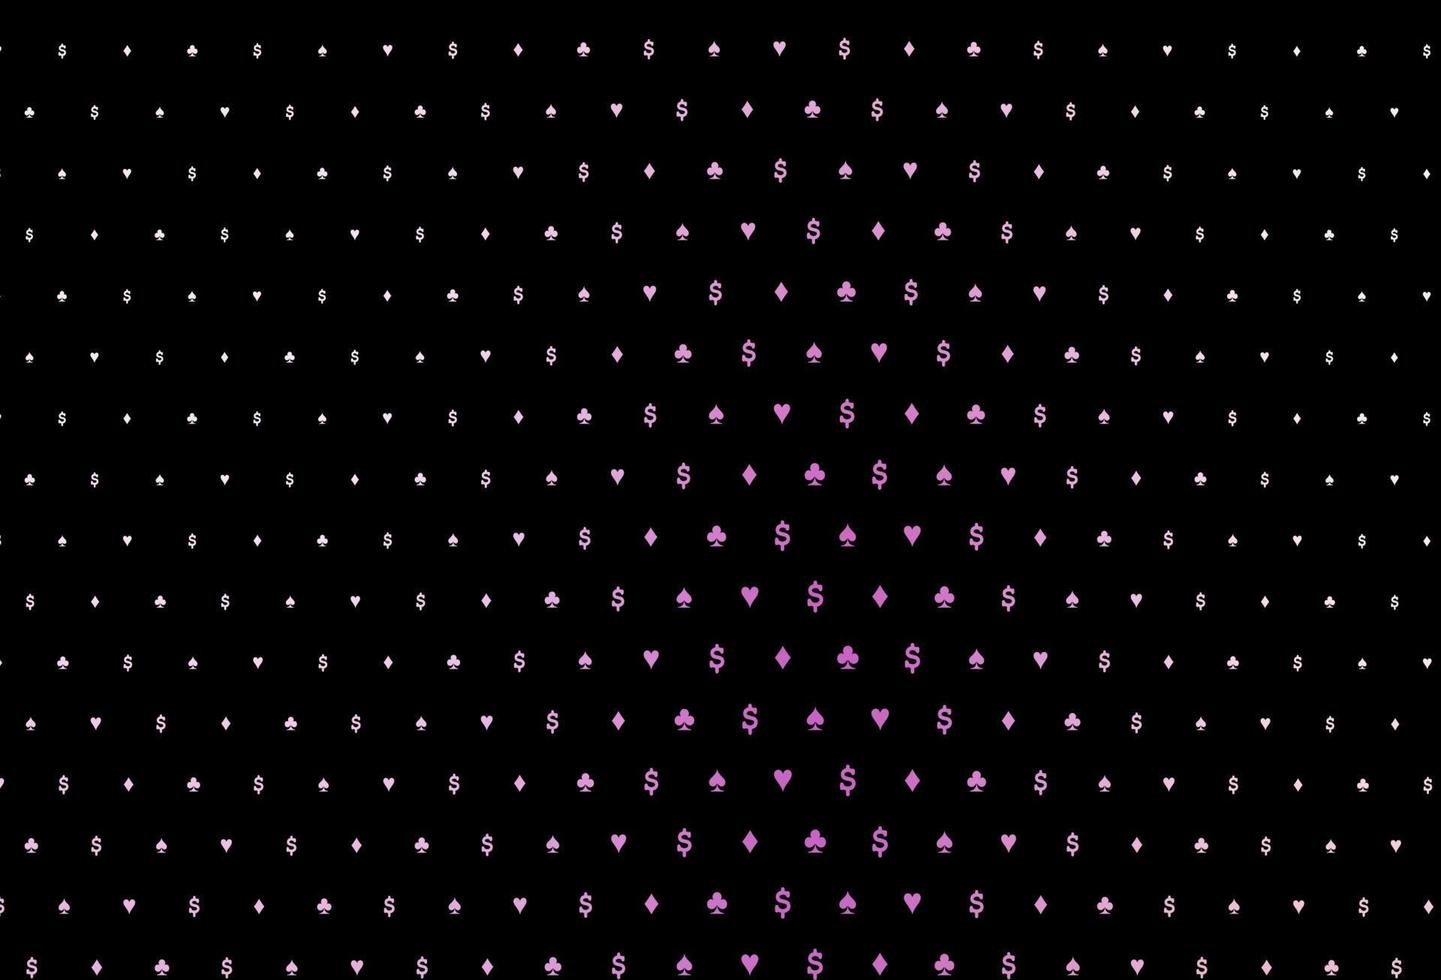 plantilla de vector de color púrpura oscuro con símbolos de póquer.